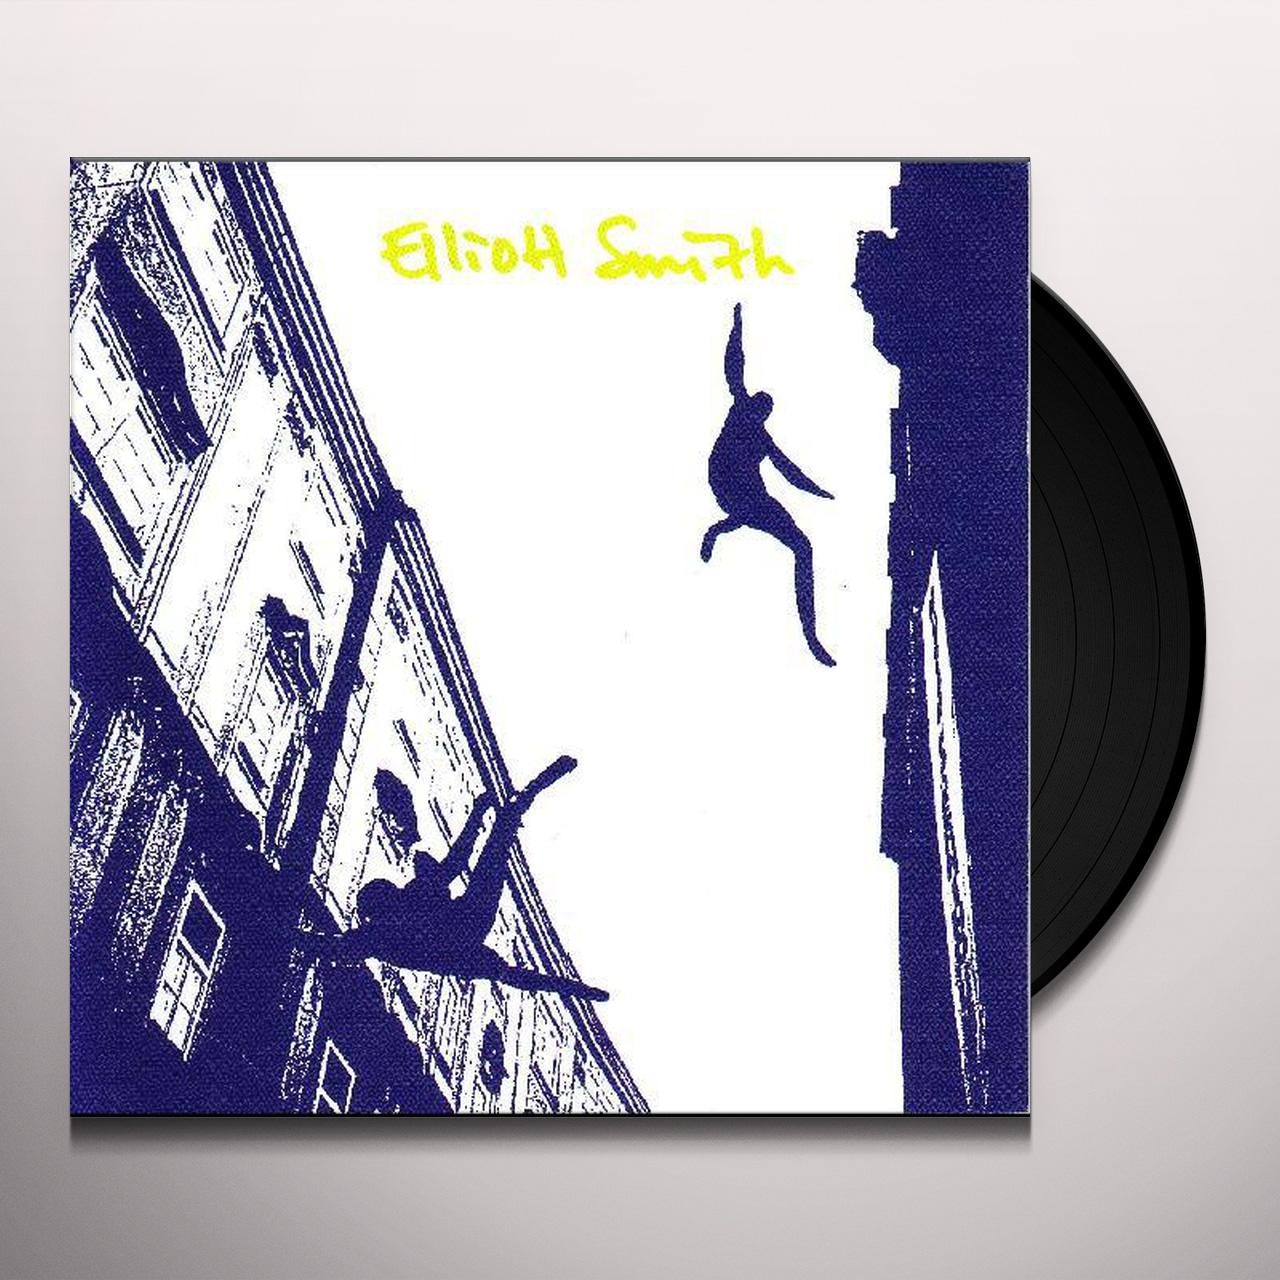 Elliott Smith "Elliott Smith" LP